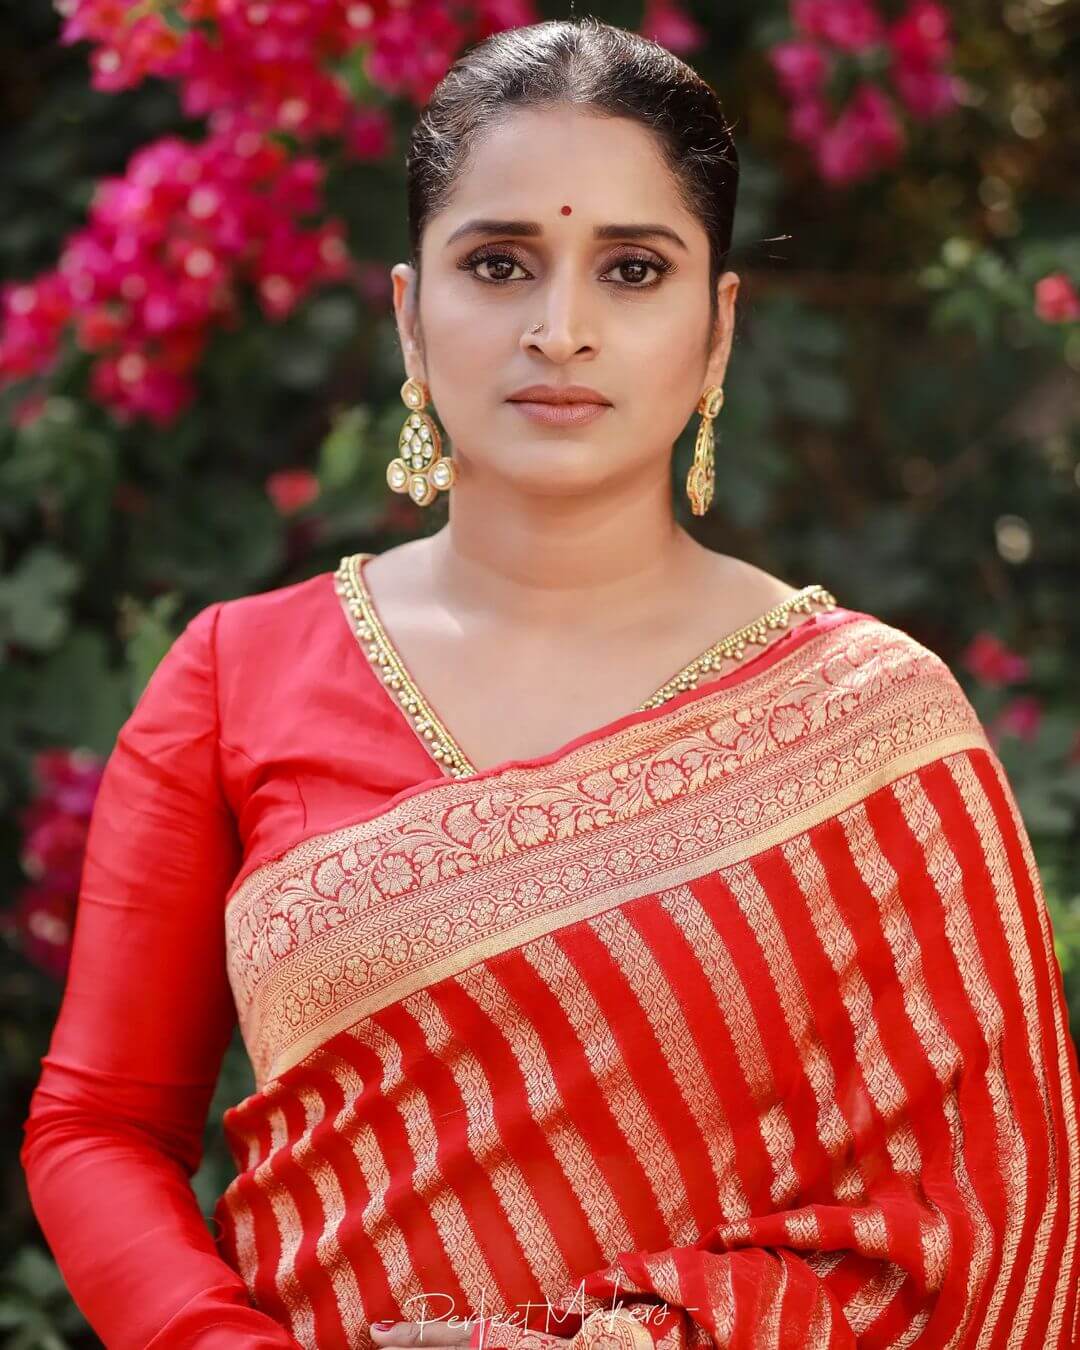 Surabhi Lakshmi close up shot in red saree